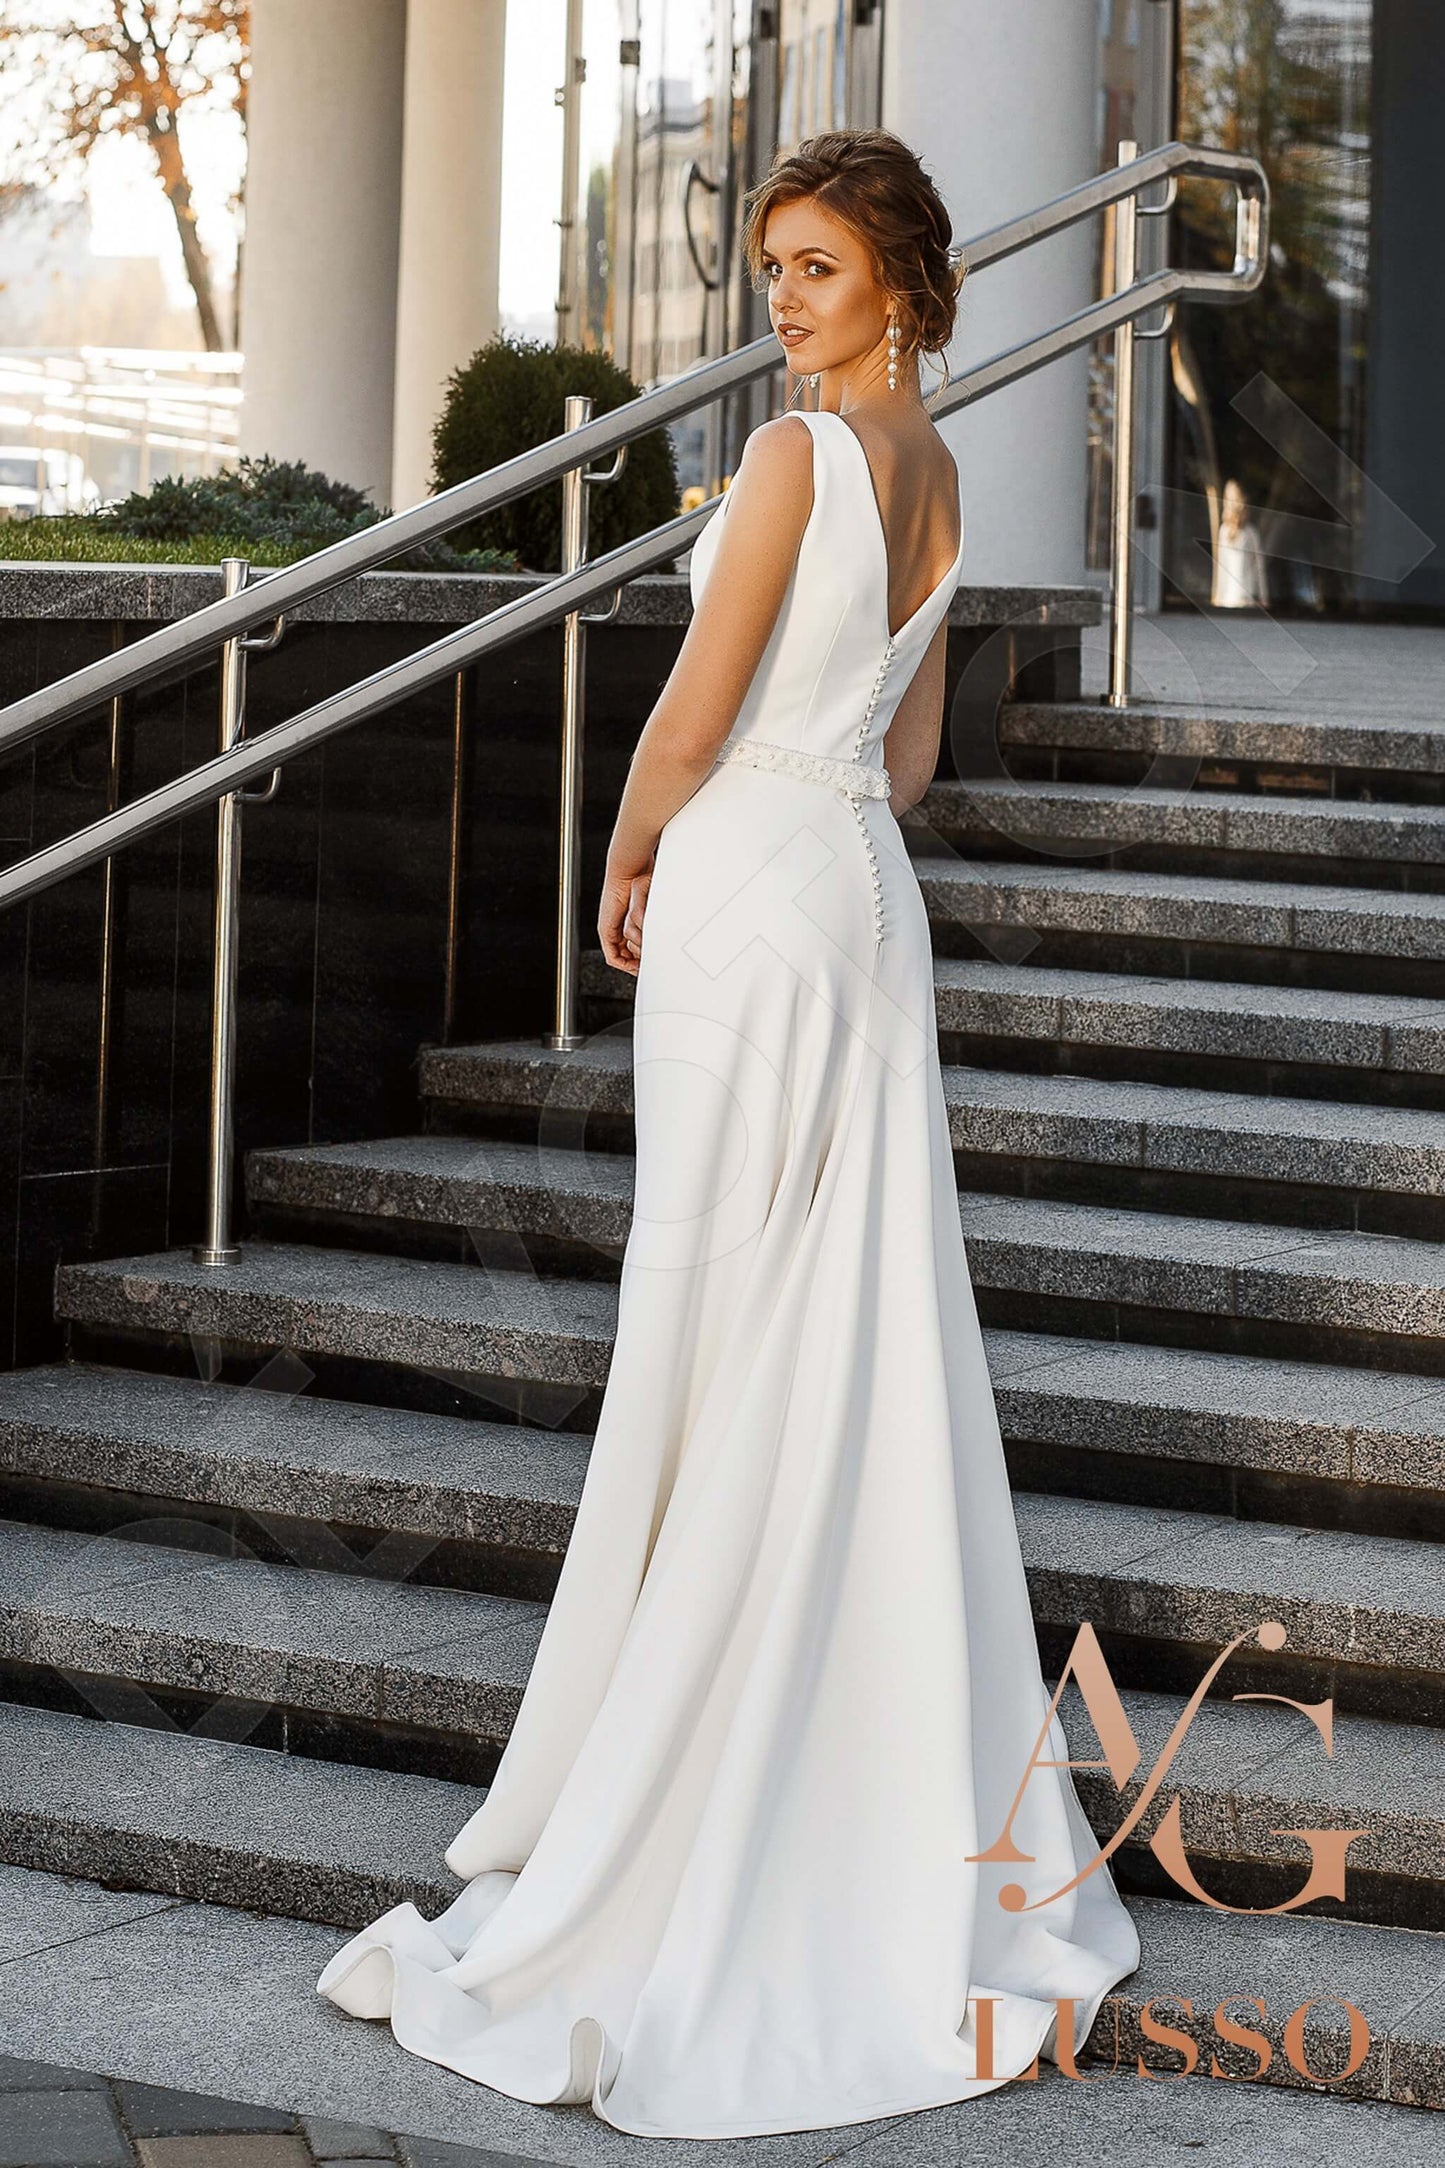 Taylor Open back Sheath/Column Sleeveless Wedding Dress 10